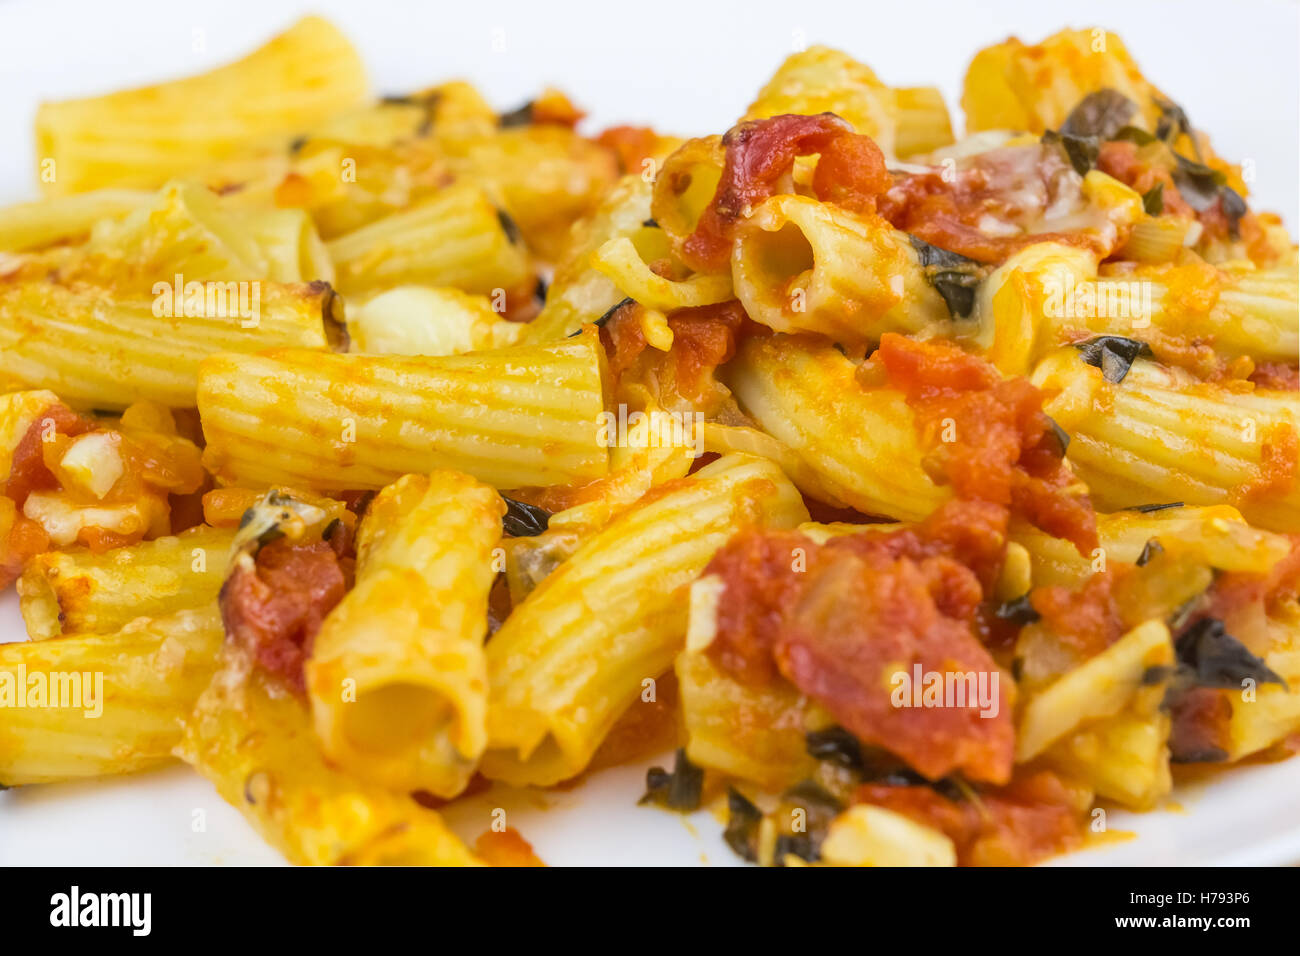 Baked tortiglioni pasta with tomato sauce, mozzarella and parmesan cheese in plate Stock Photo